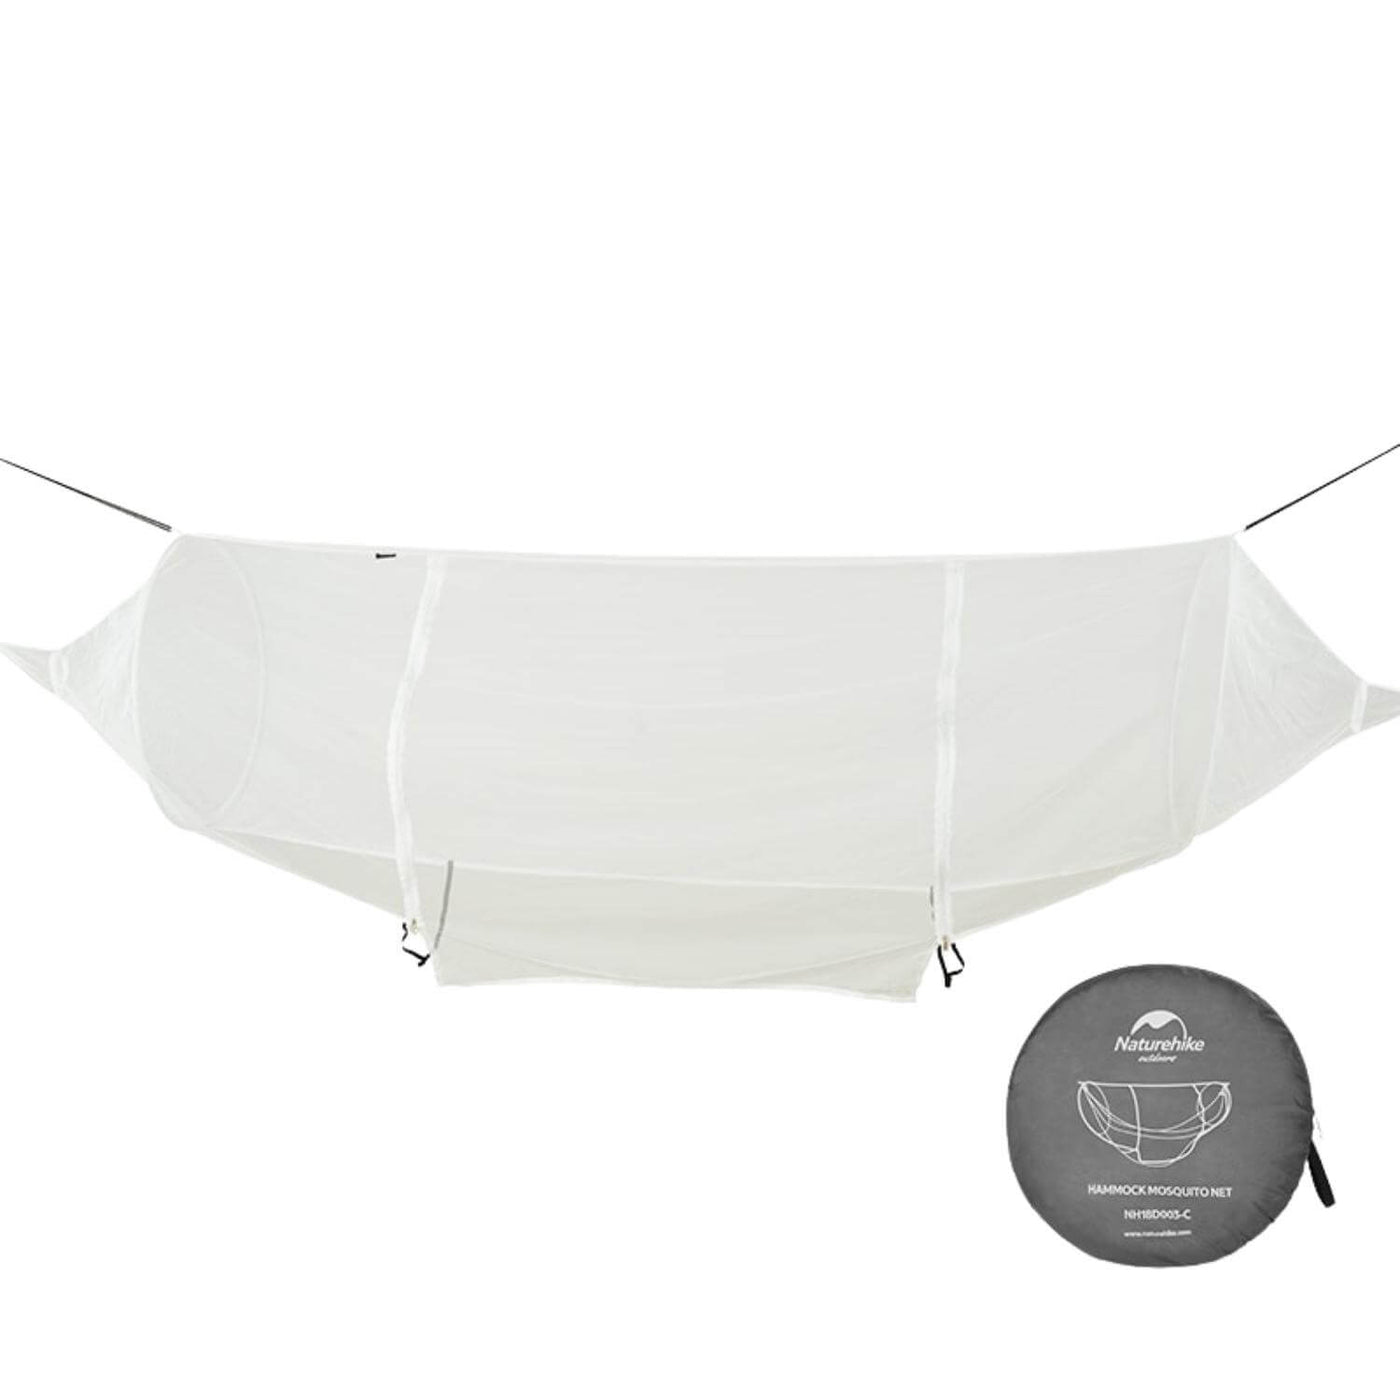 Universal mosquito net for hammock